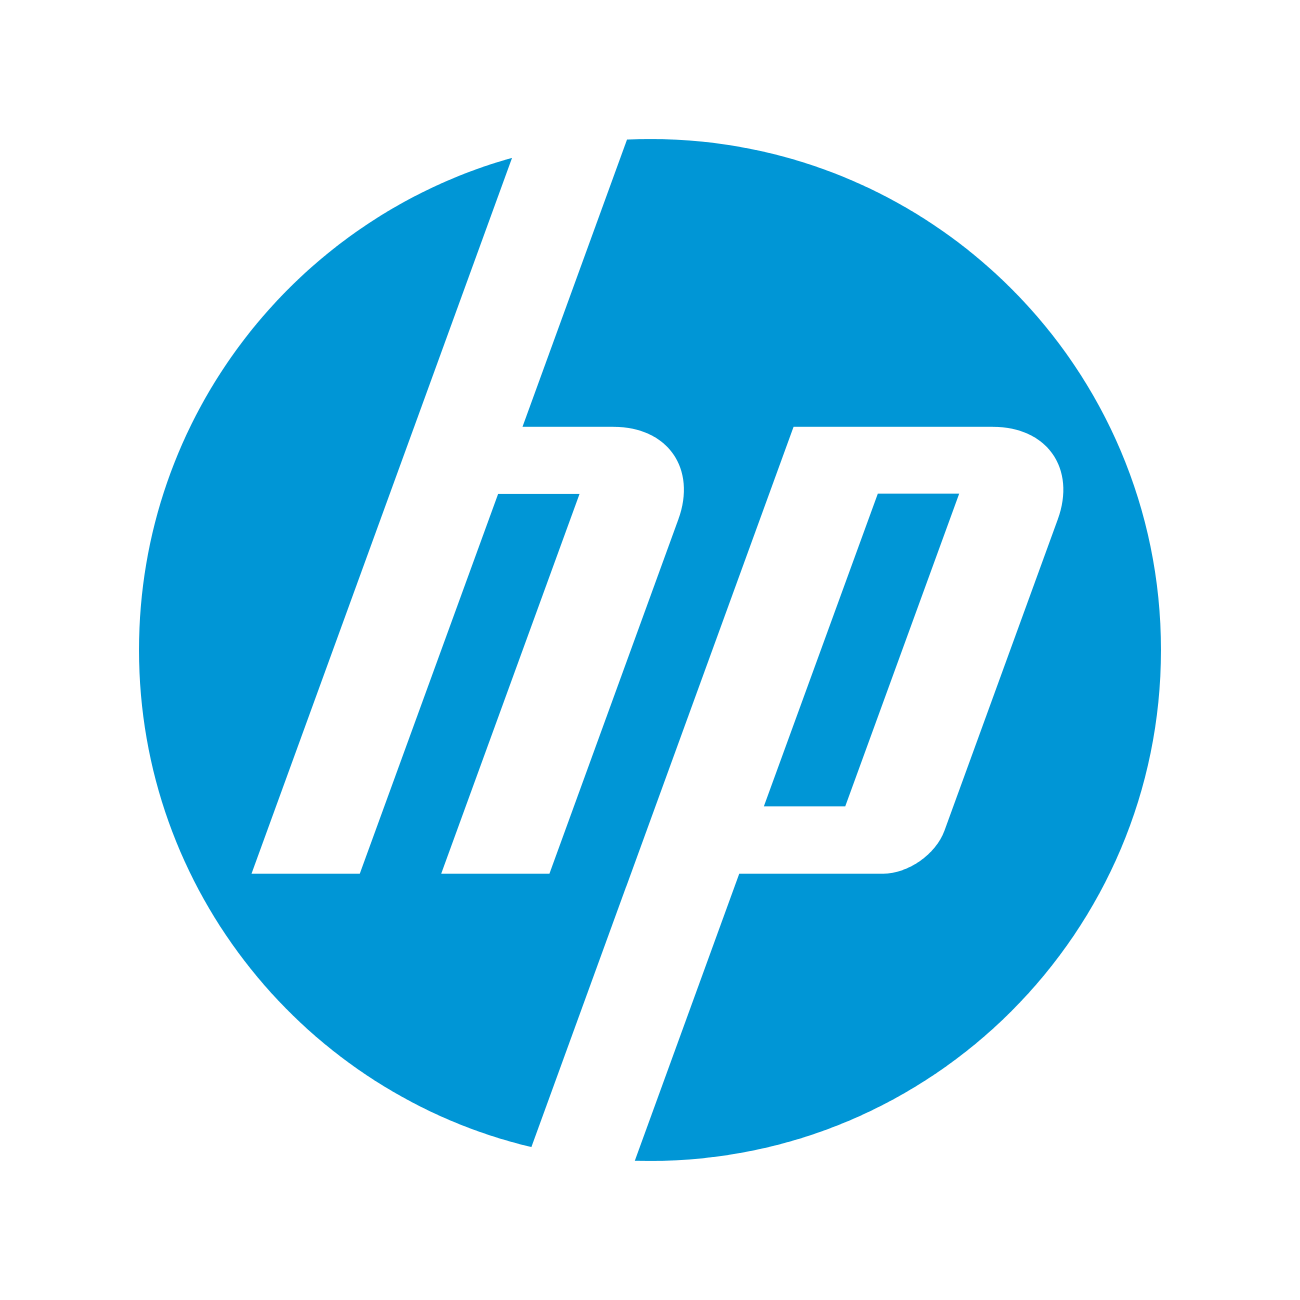 HP Inkjet Photo Paper